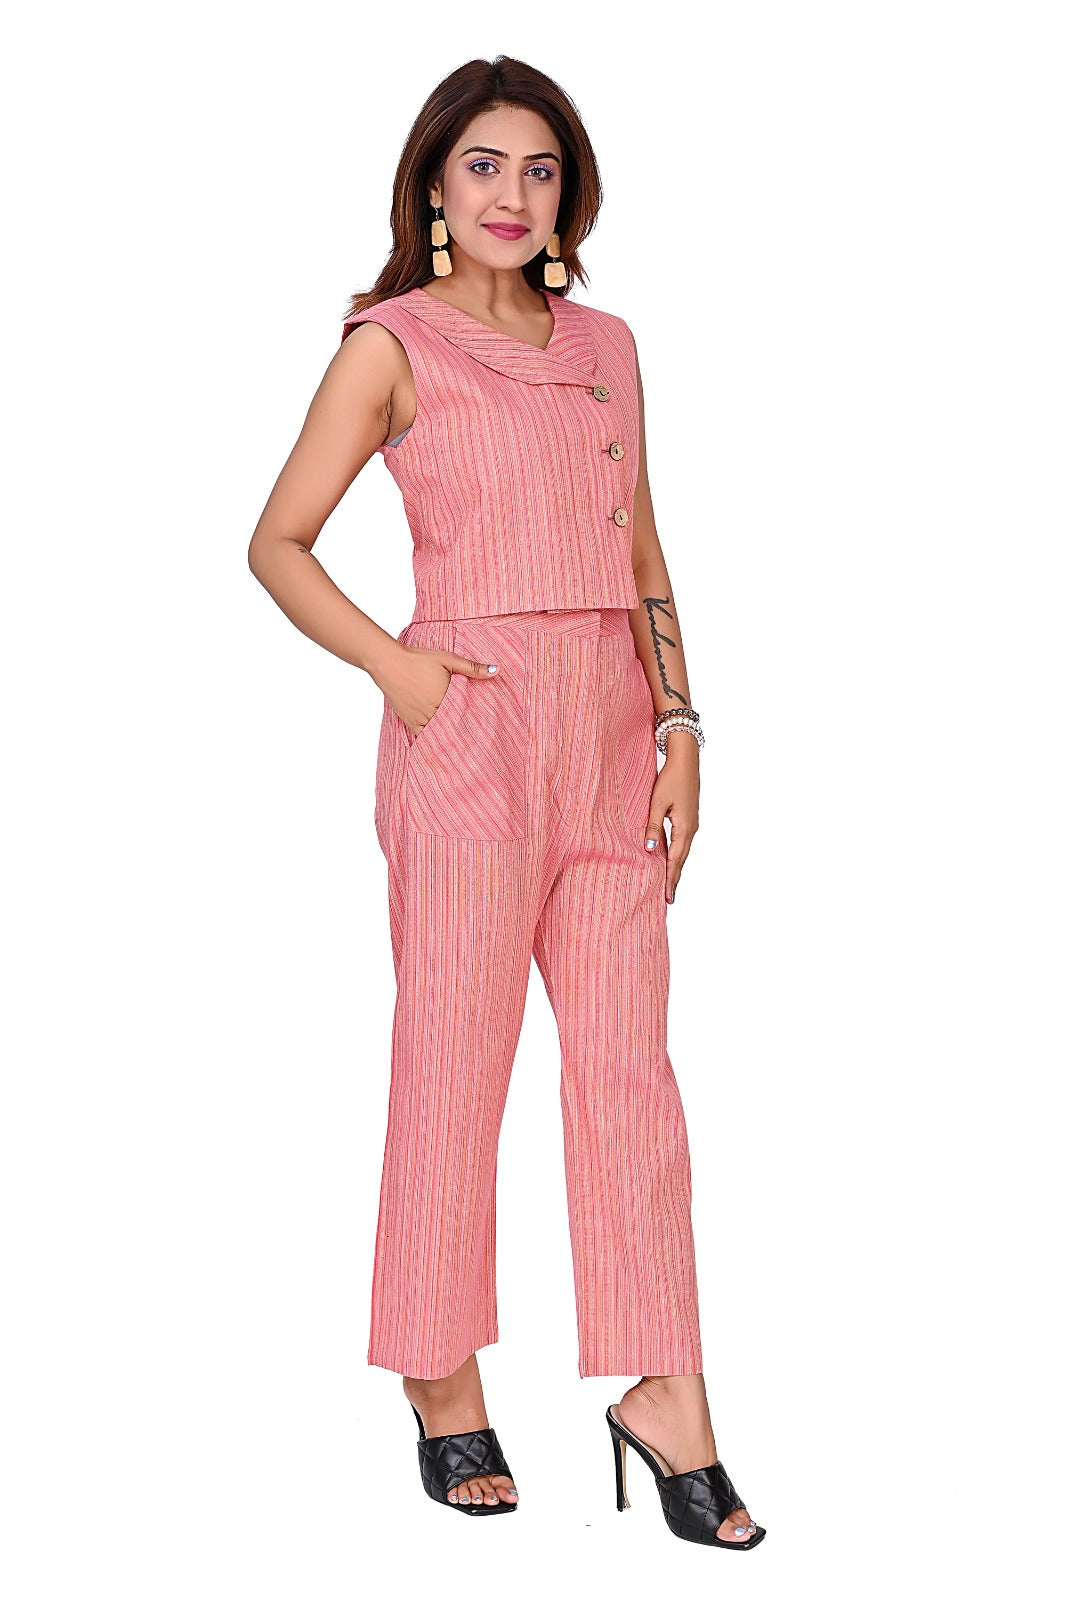 Nirmal online Premium Cotton Stripe co-ord set for Women in pink Colour